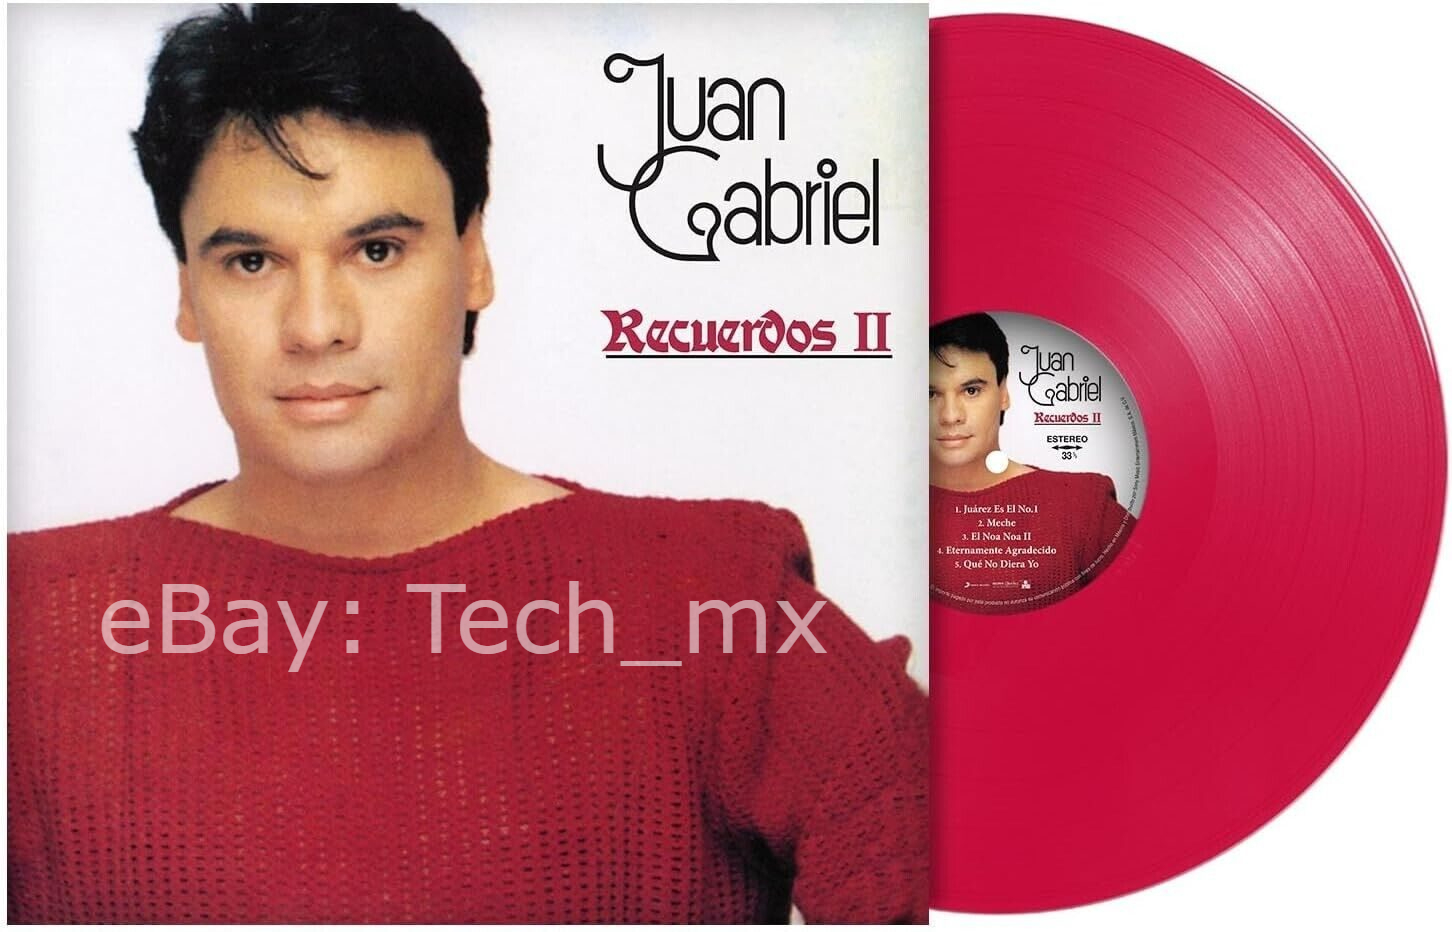 Juan Gabriel - Recuerdos II 2 Vinyl ROJO LP Reissue NEW Sealed FREE USA Shipping